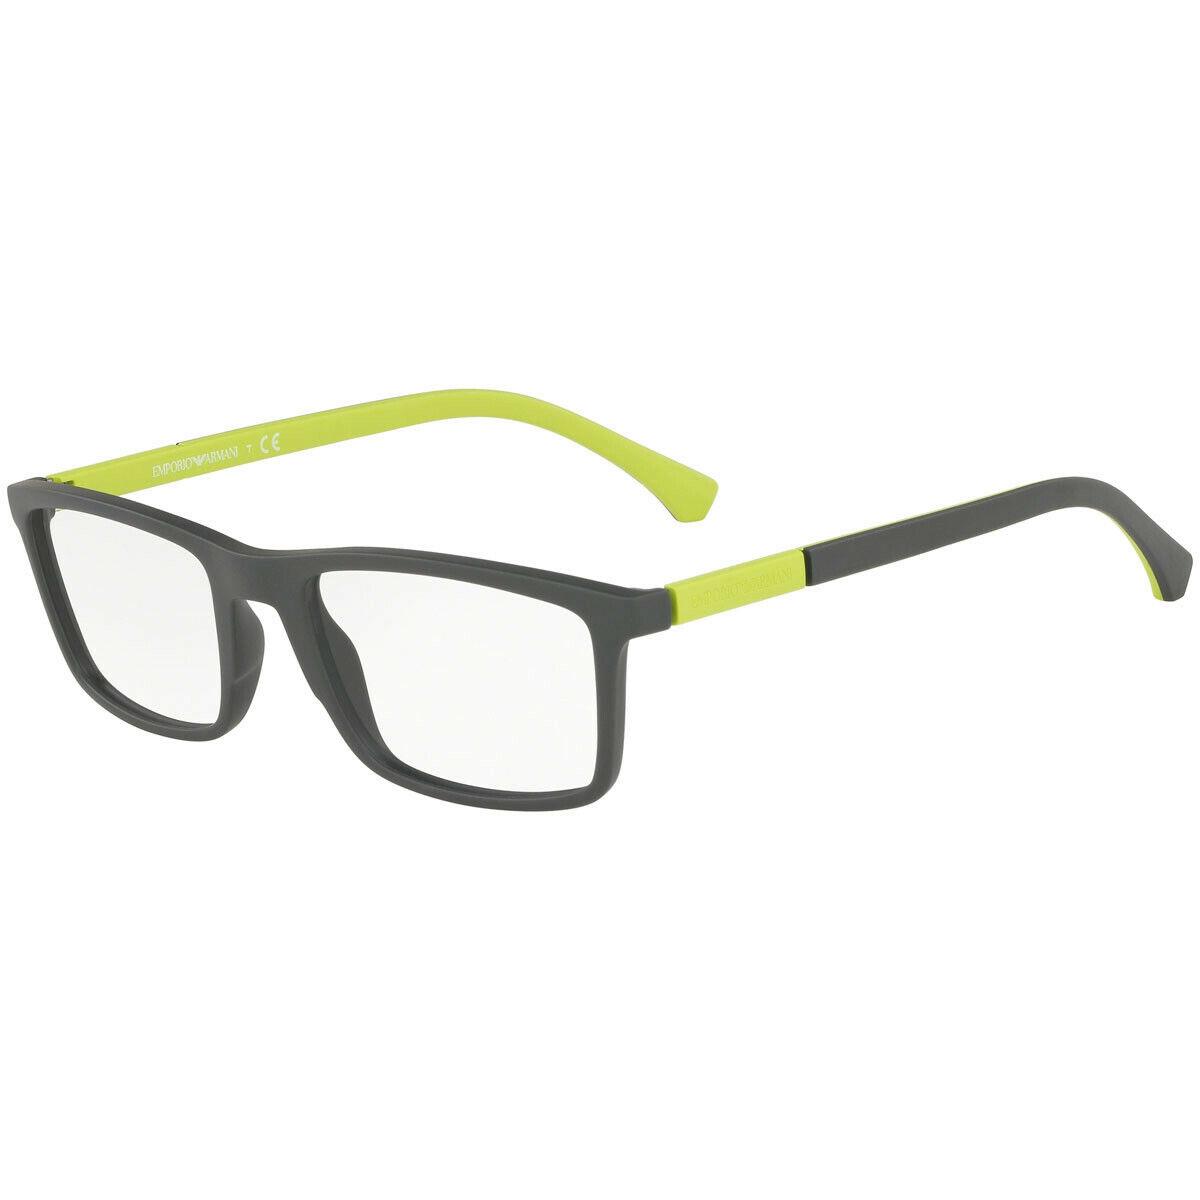 Emporio Armani Eyeglasses EA 3152 5753 Green Rubber W/ Demo Lens 53 MM